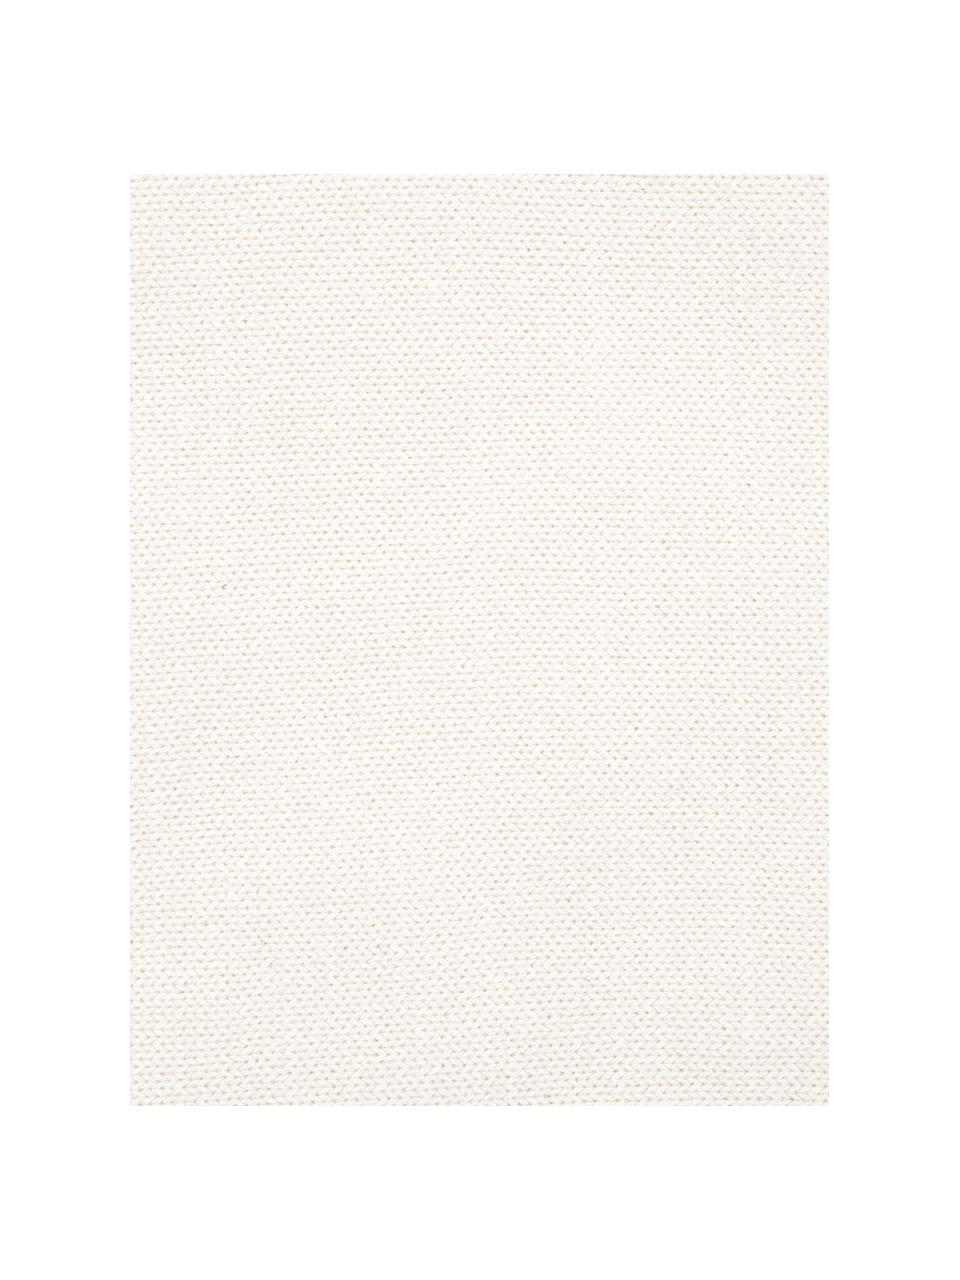 Funda de cojín de punto Elly, 100% algodón, Blanco crema, An 40 x L 40 cm